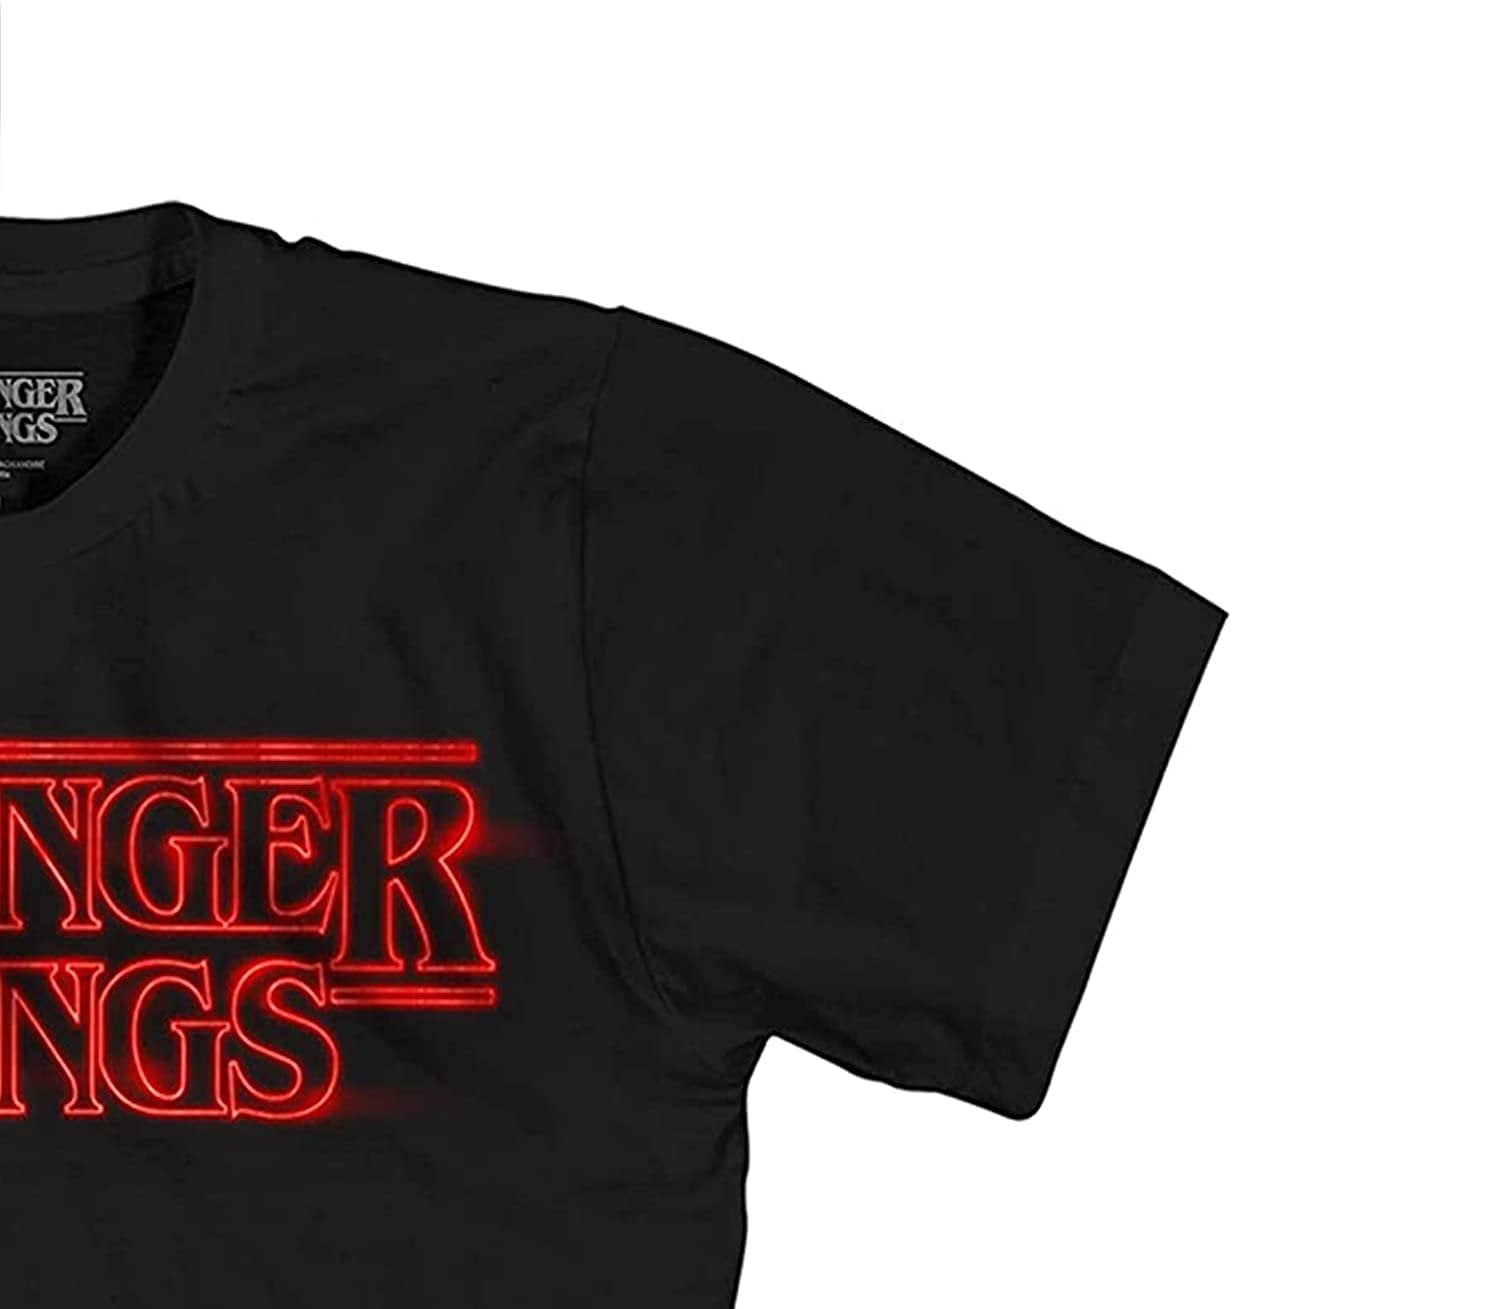  Stranger Things T Shirt for Men, Netflix Mens Clothing, Netflix TV Show Gifts